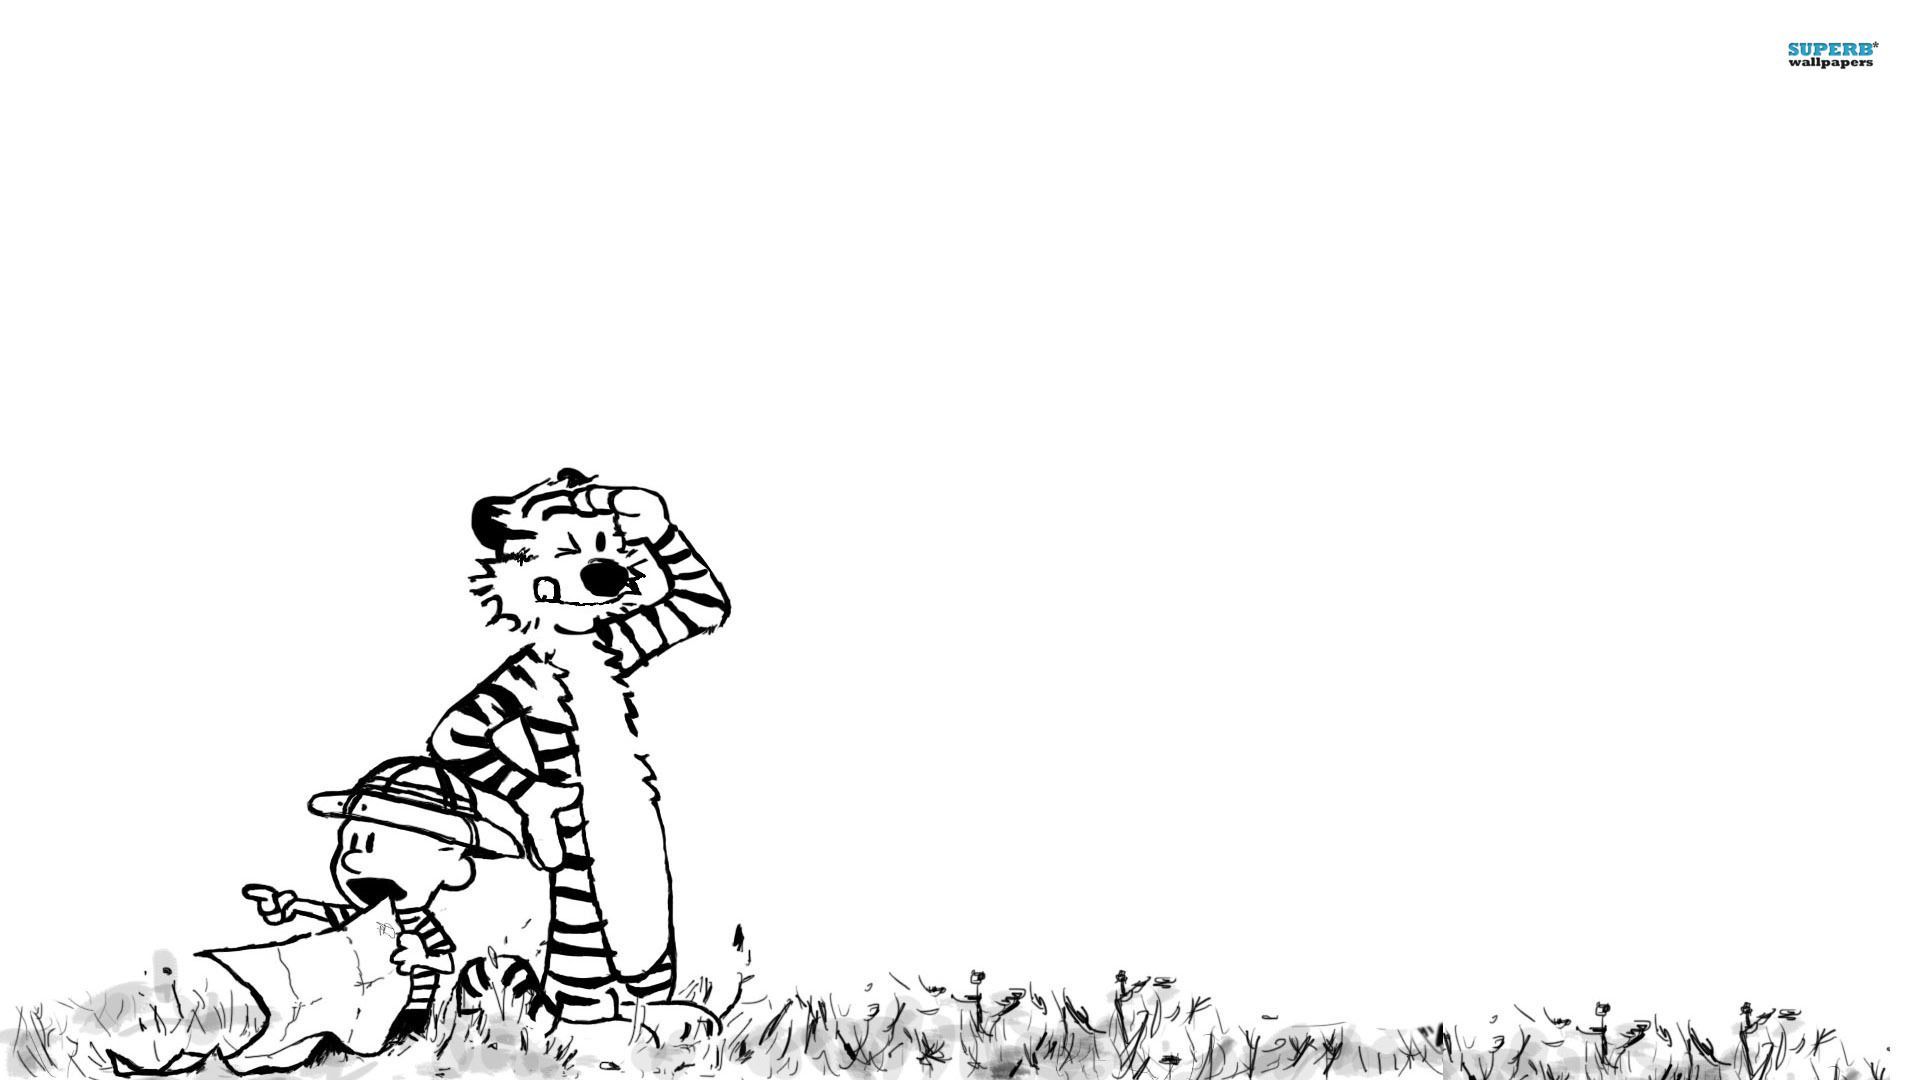 Calvin and Hobbes wallpaper - Cartoon wallpapers